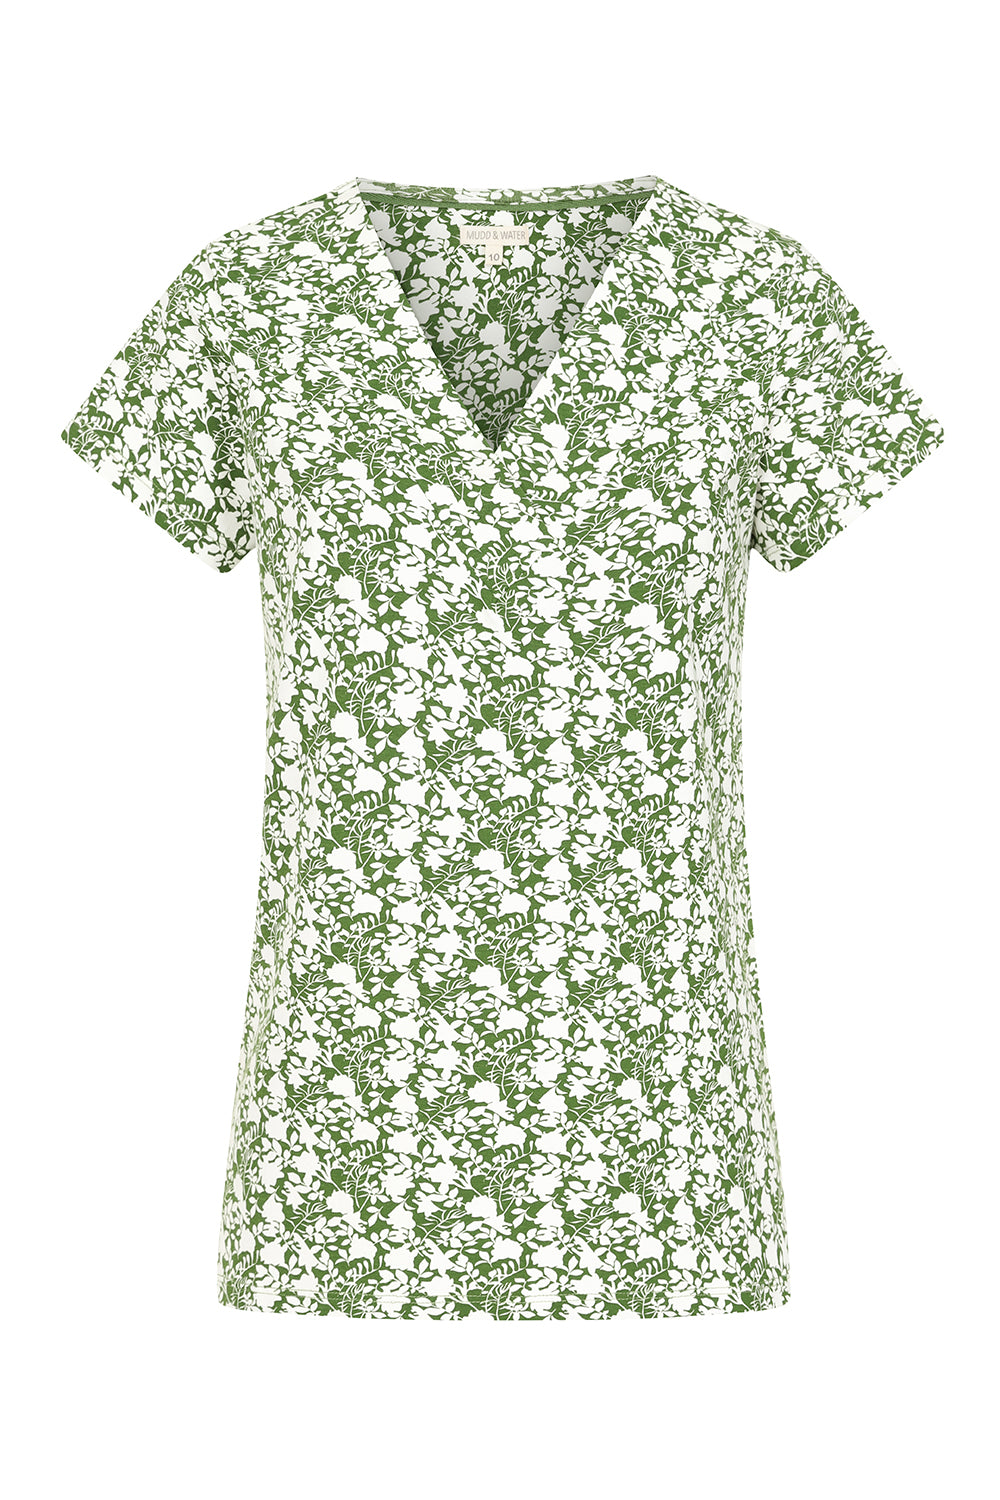 Fauna Top - Green Foliage Print - GOTS Organic Cotton